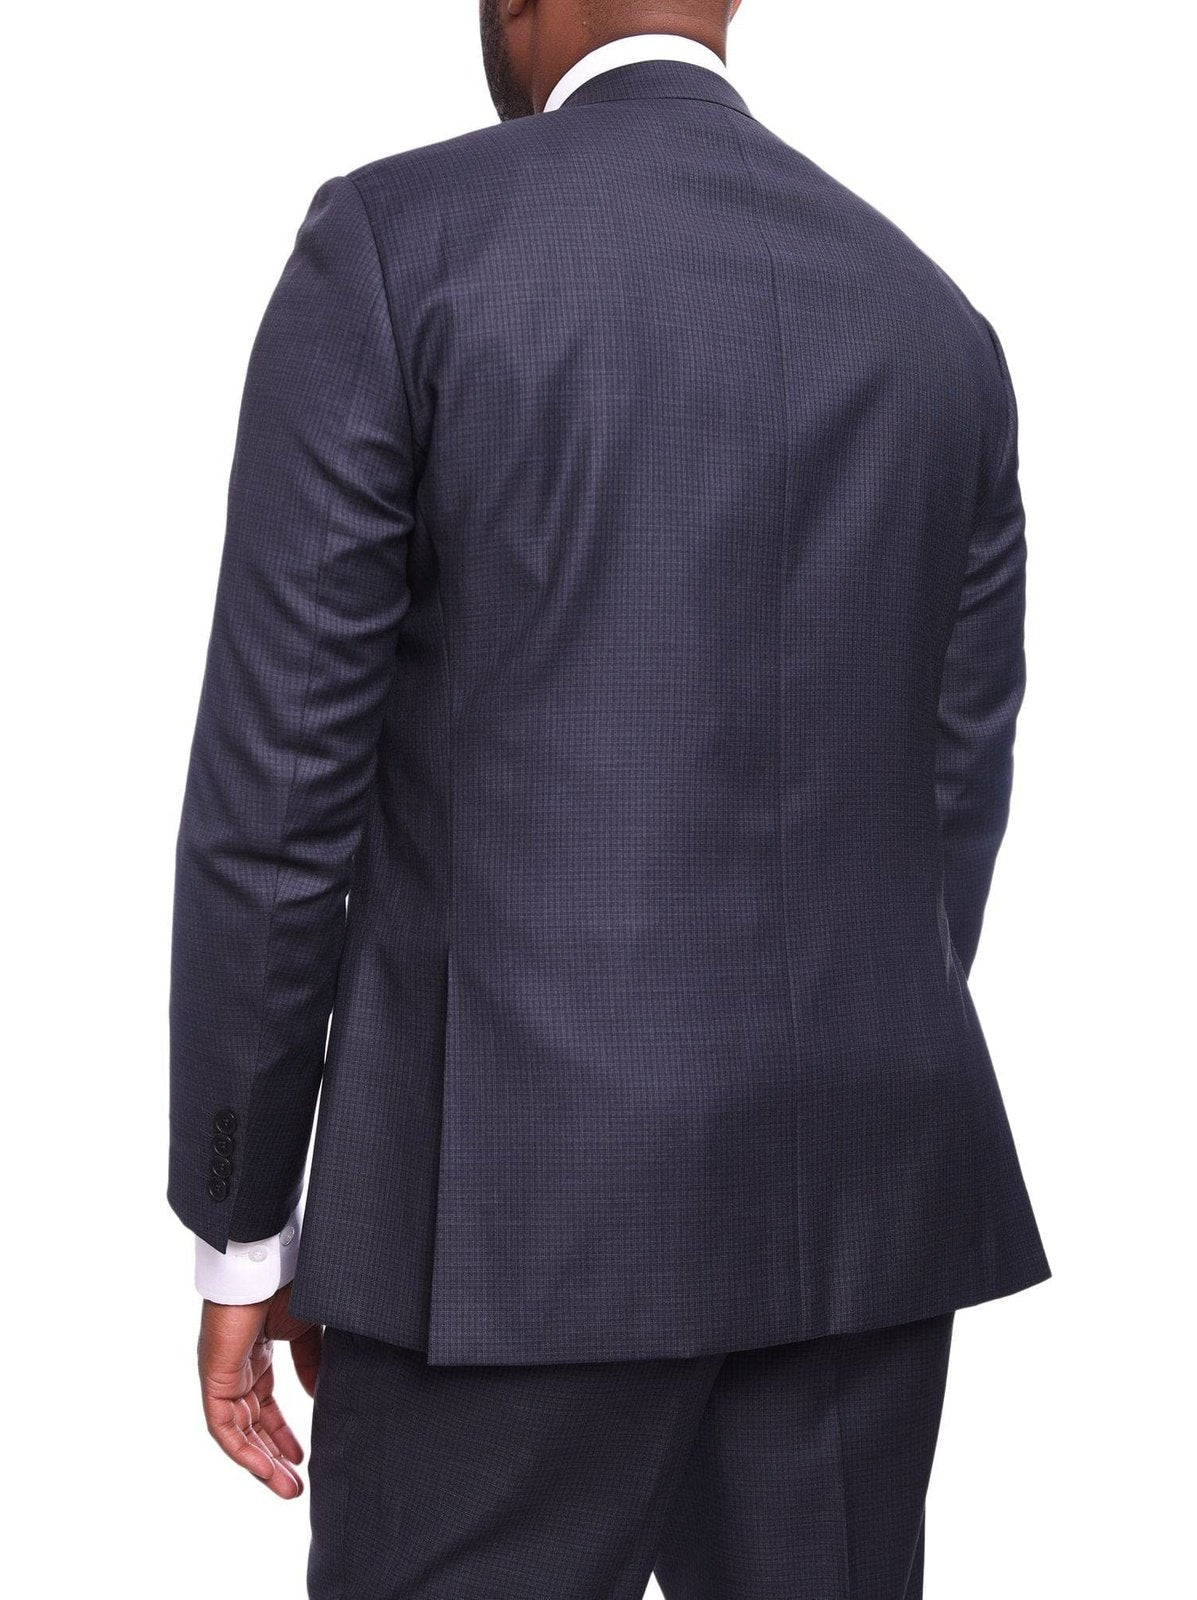 Napoli Sale Suits Men's Napoli Classic Fit Blue Plaid 2 Button 100% Italian Loro Piana Wool Suit